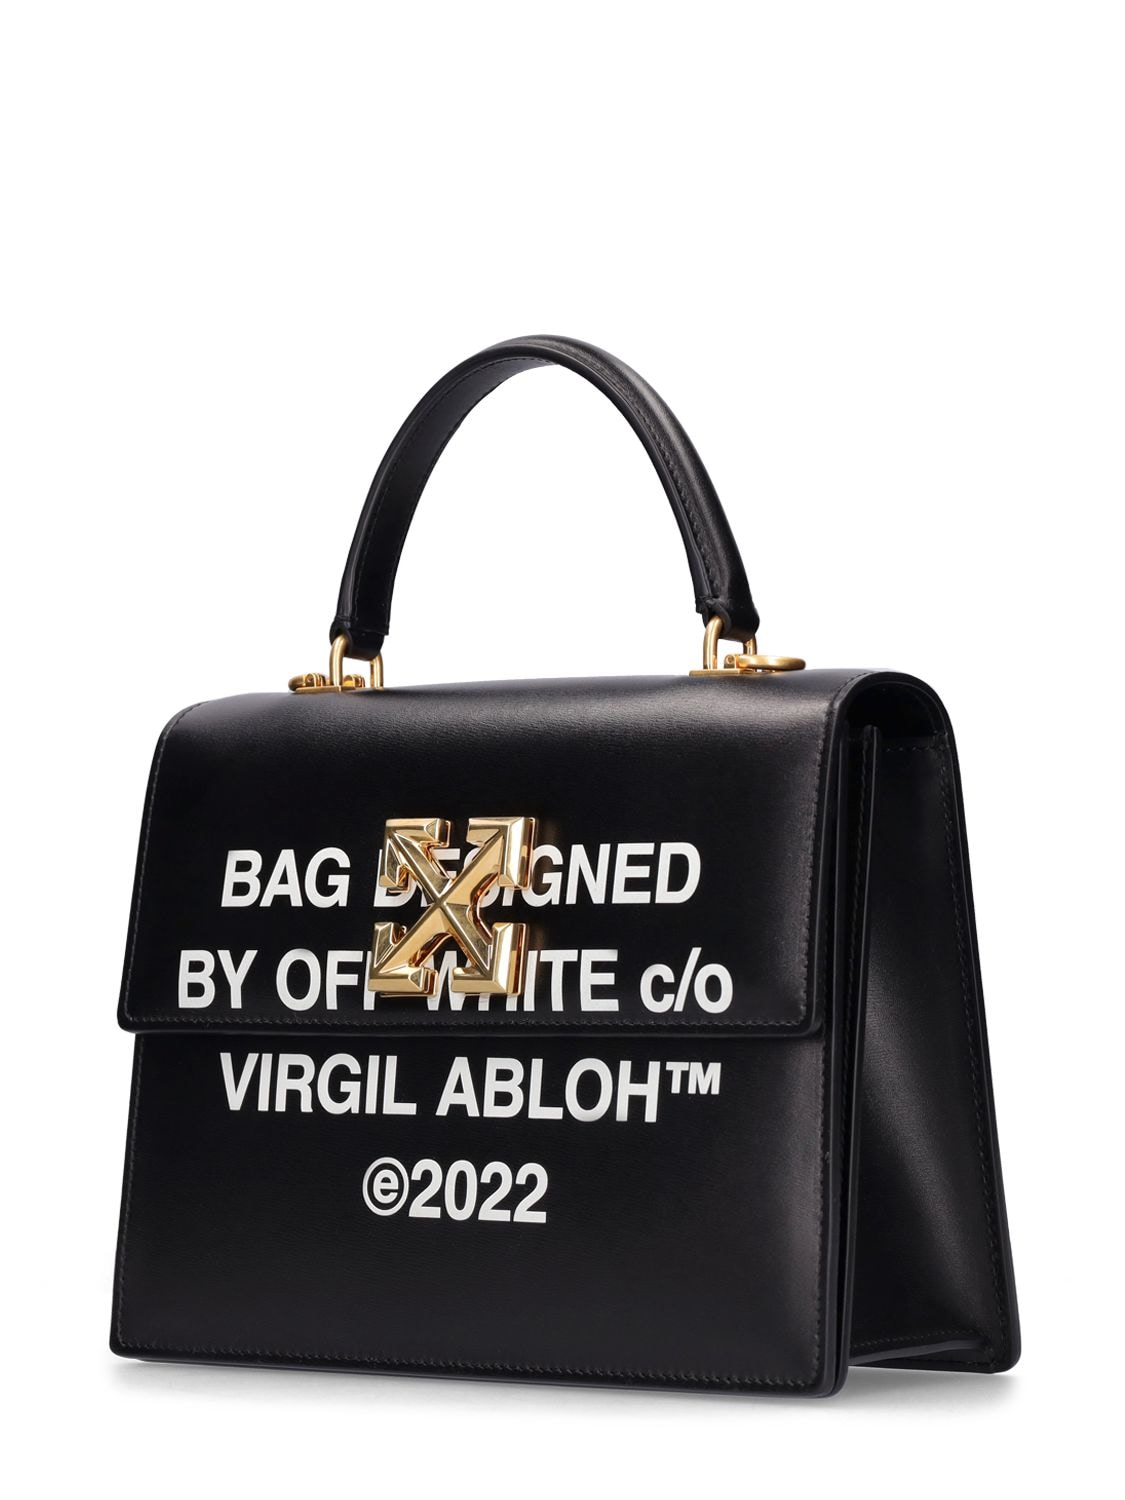 Off-White c/o Virgil Abloh Jitney 2.8 Handbag in Black